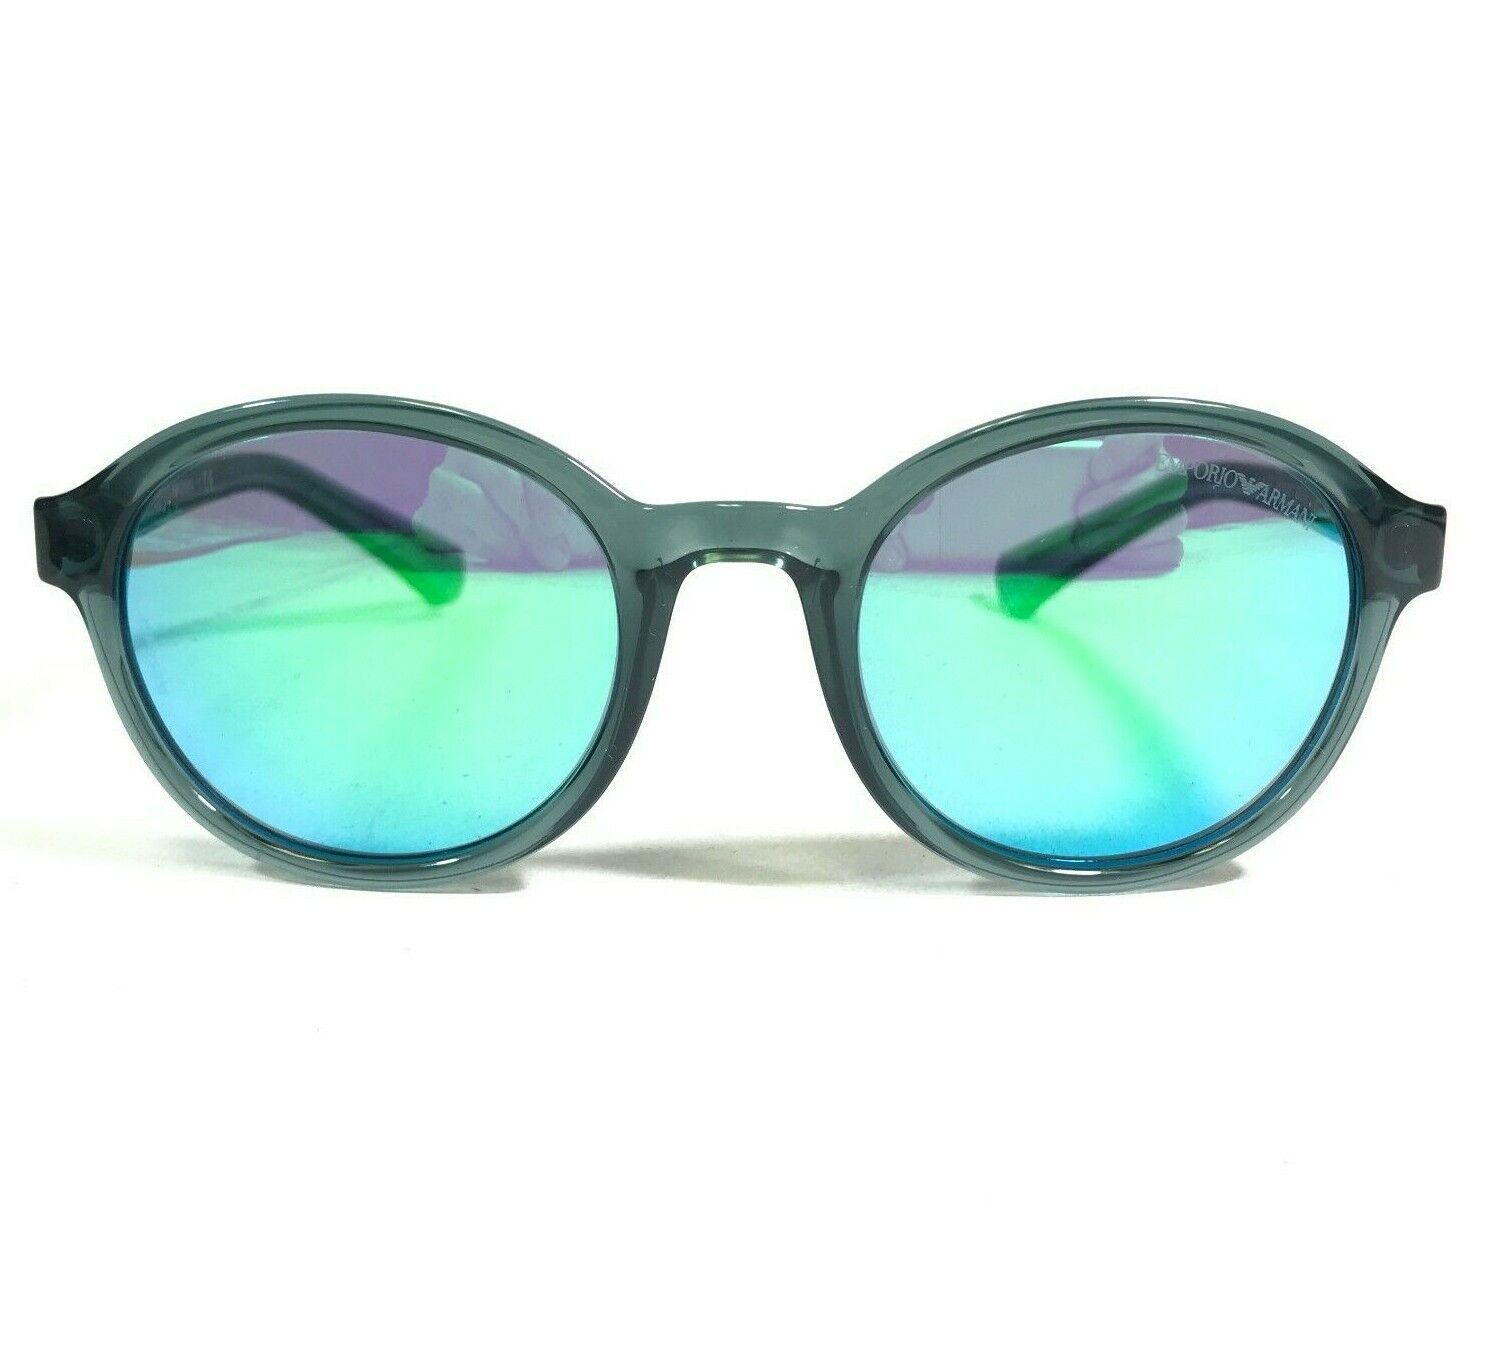 Emporio Armani Sunglasses EA4054 5375/31 Clear Blue Green Round with Blue Lenses - $69.91